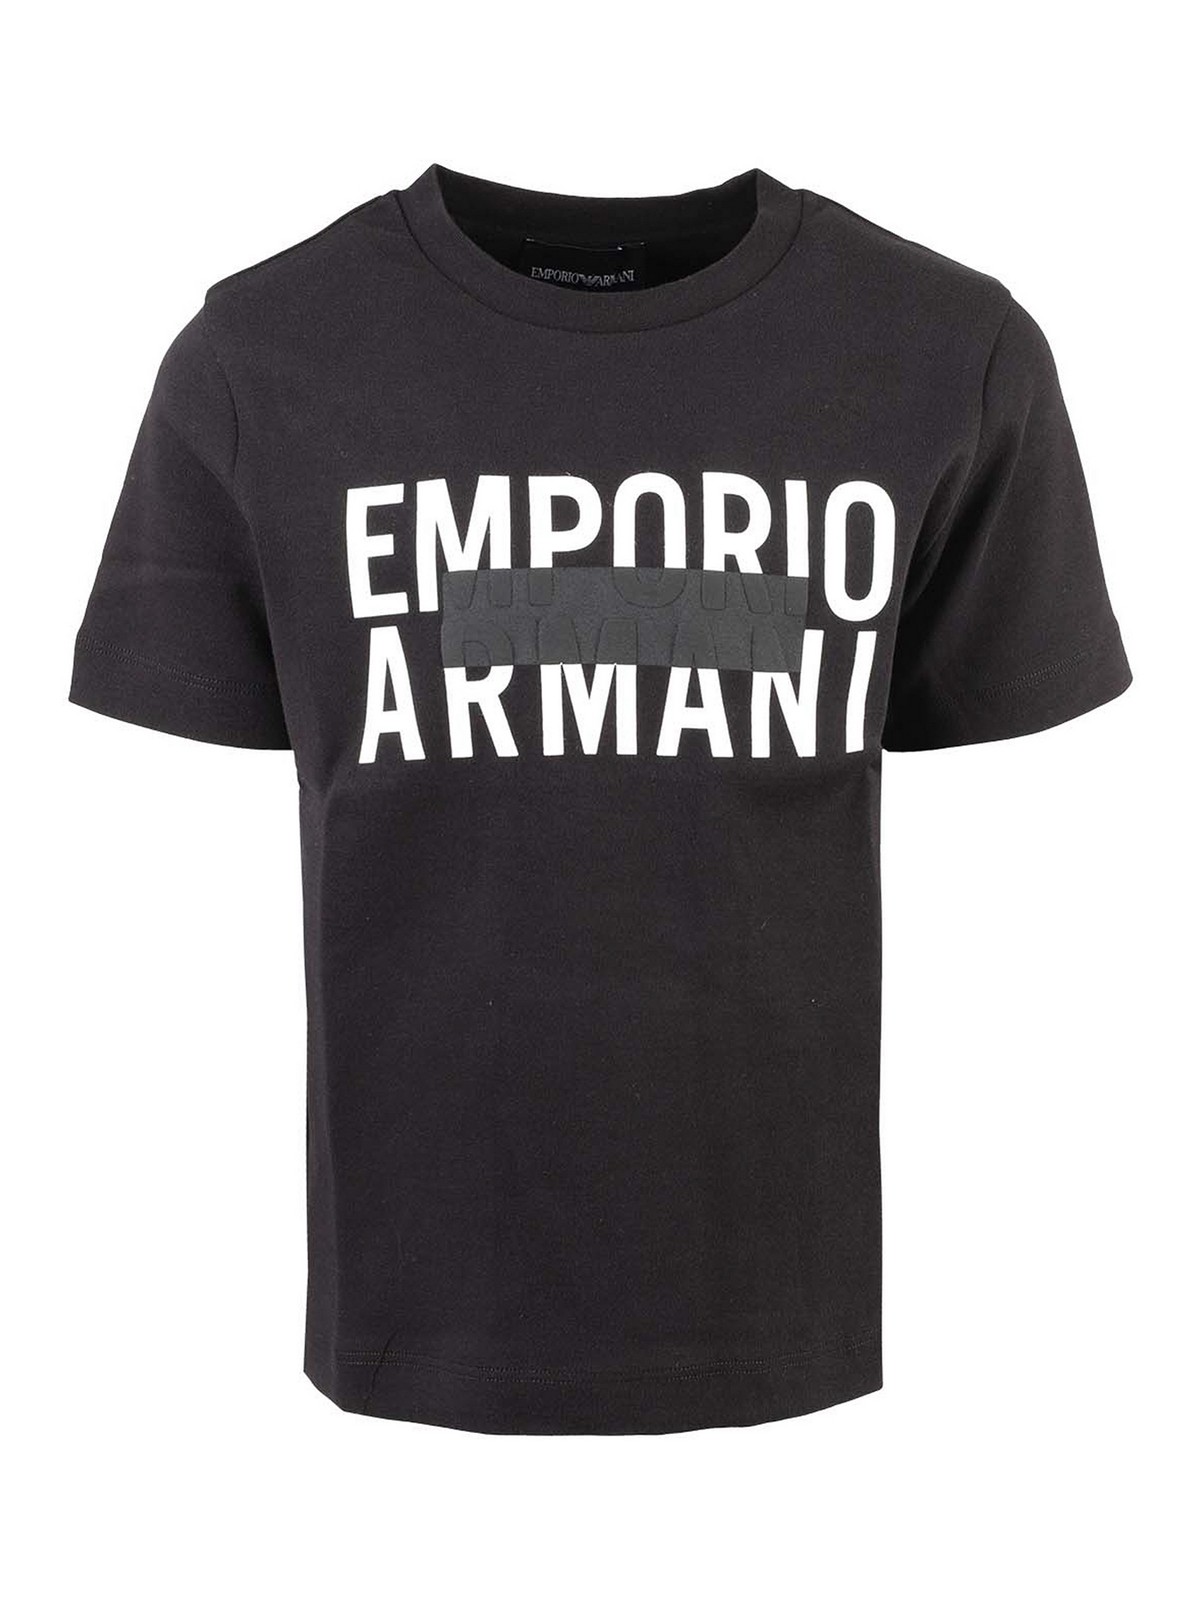 EMPORIO ARMANI LETTERING PRINT T-SHIRT